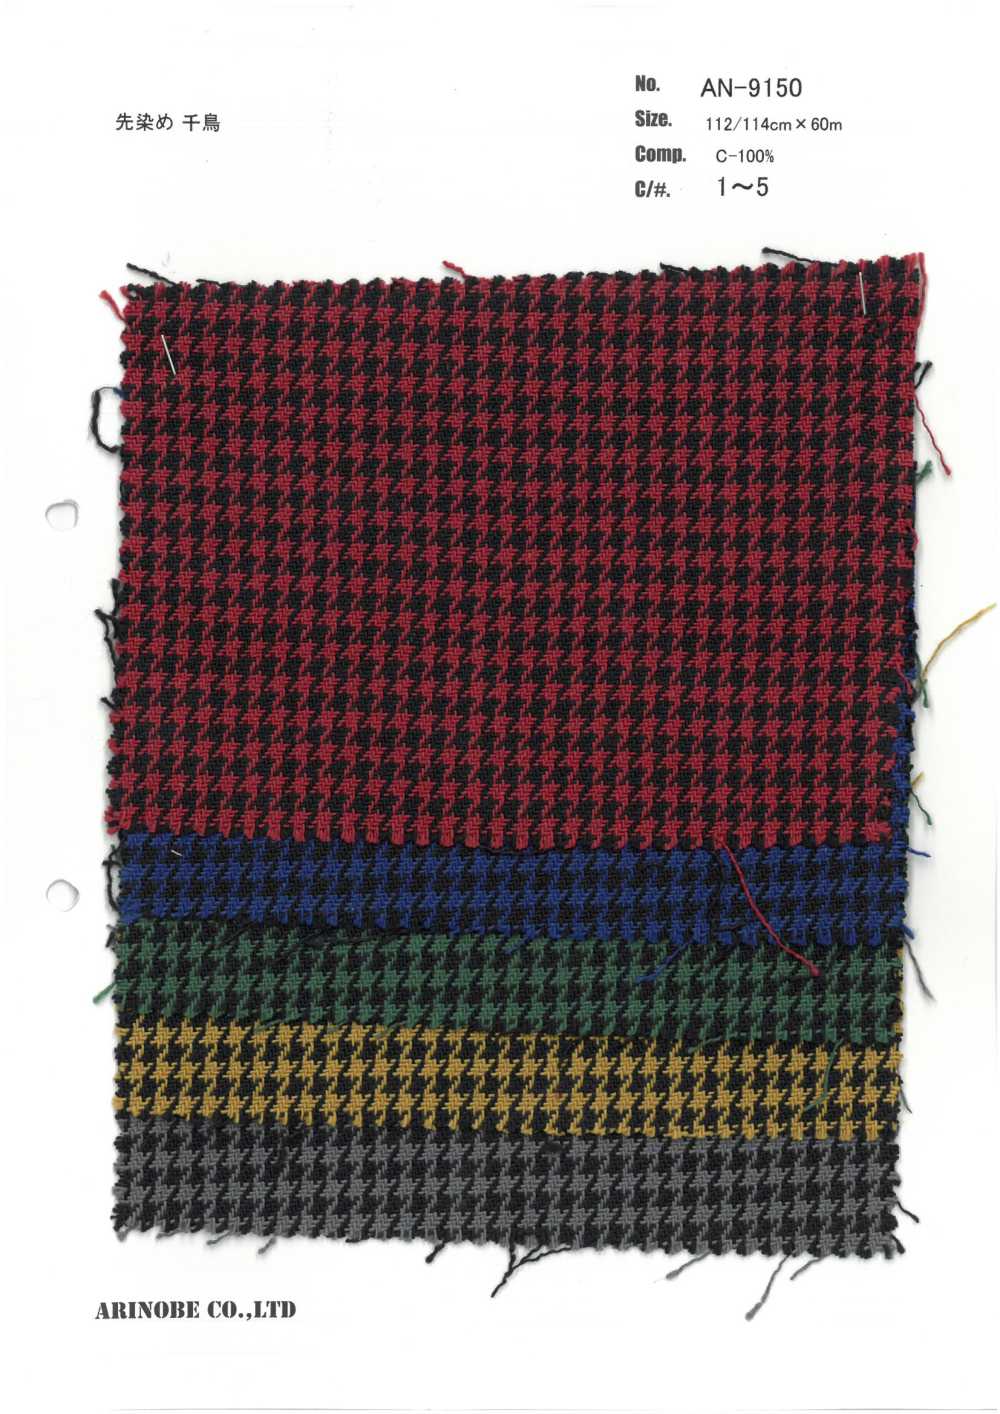 AN-9150 Yarn- Yarn Dyed Houndstooth Lattice[Textile / Fabric] ARINOBE CO., LTD.